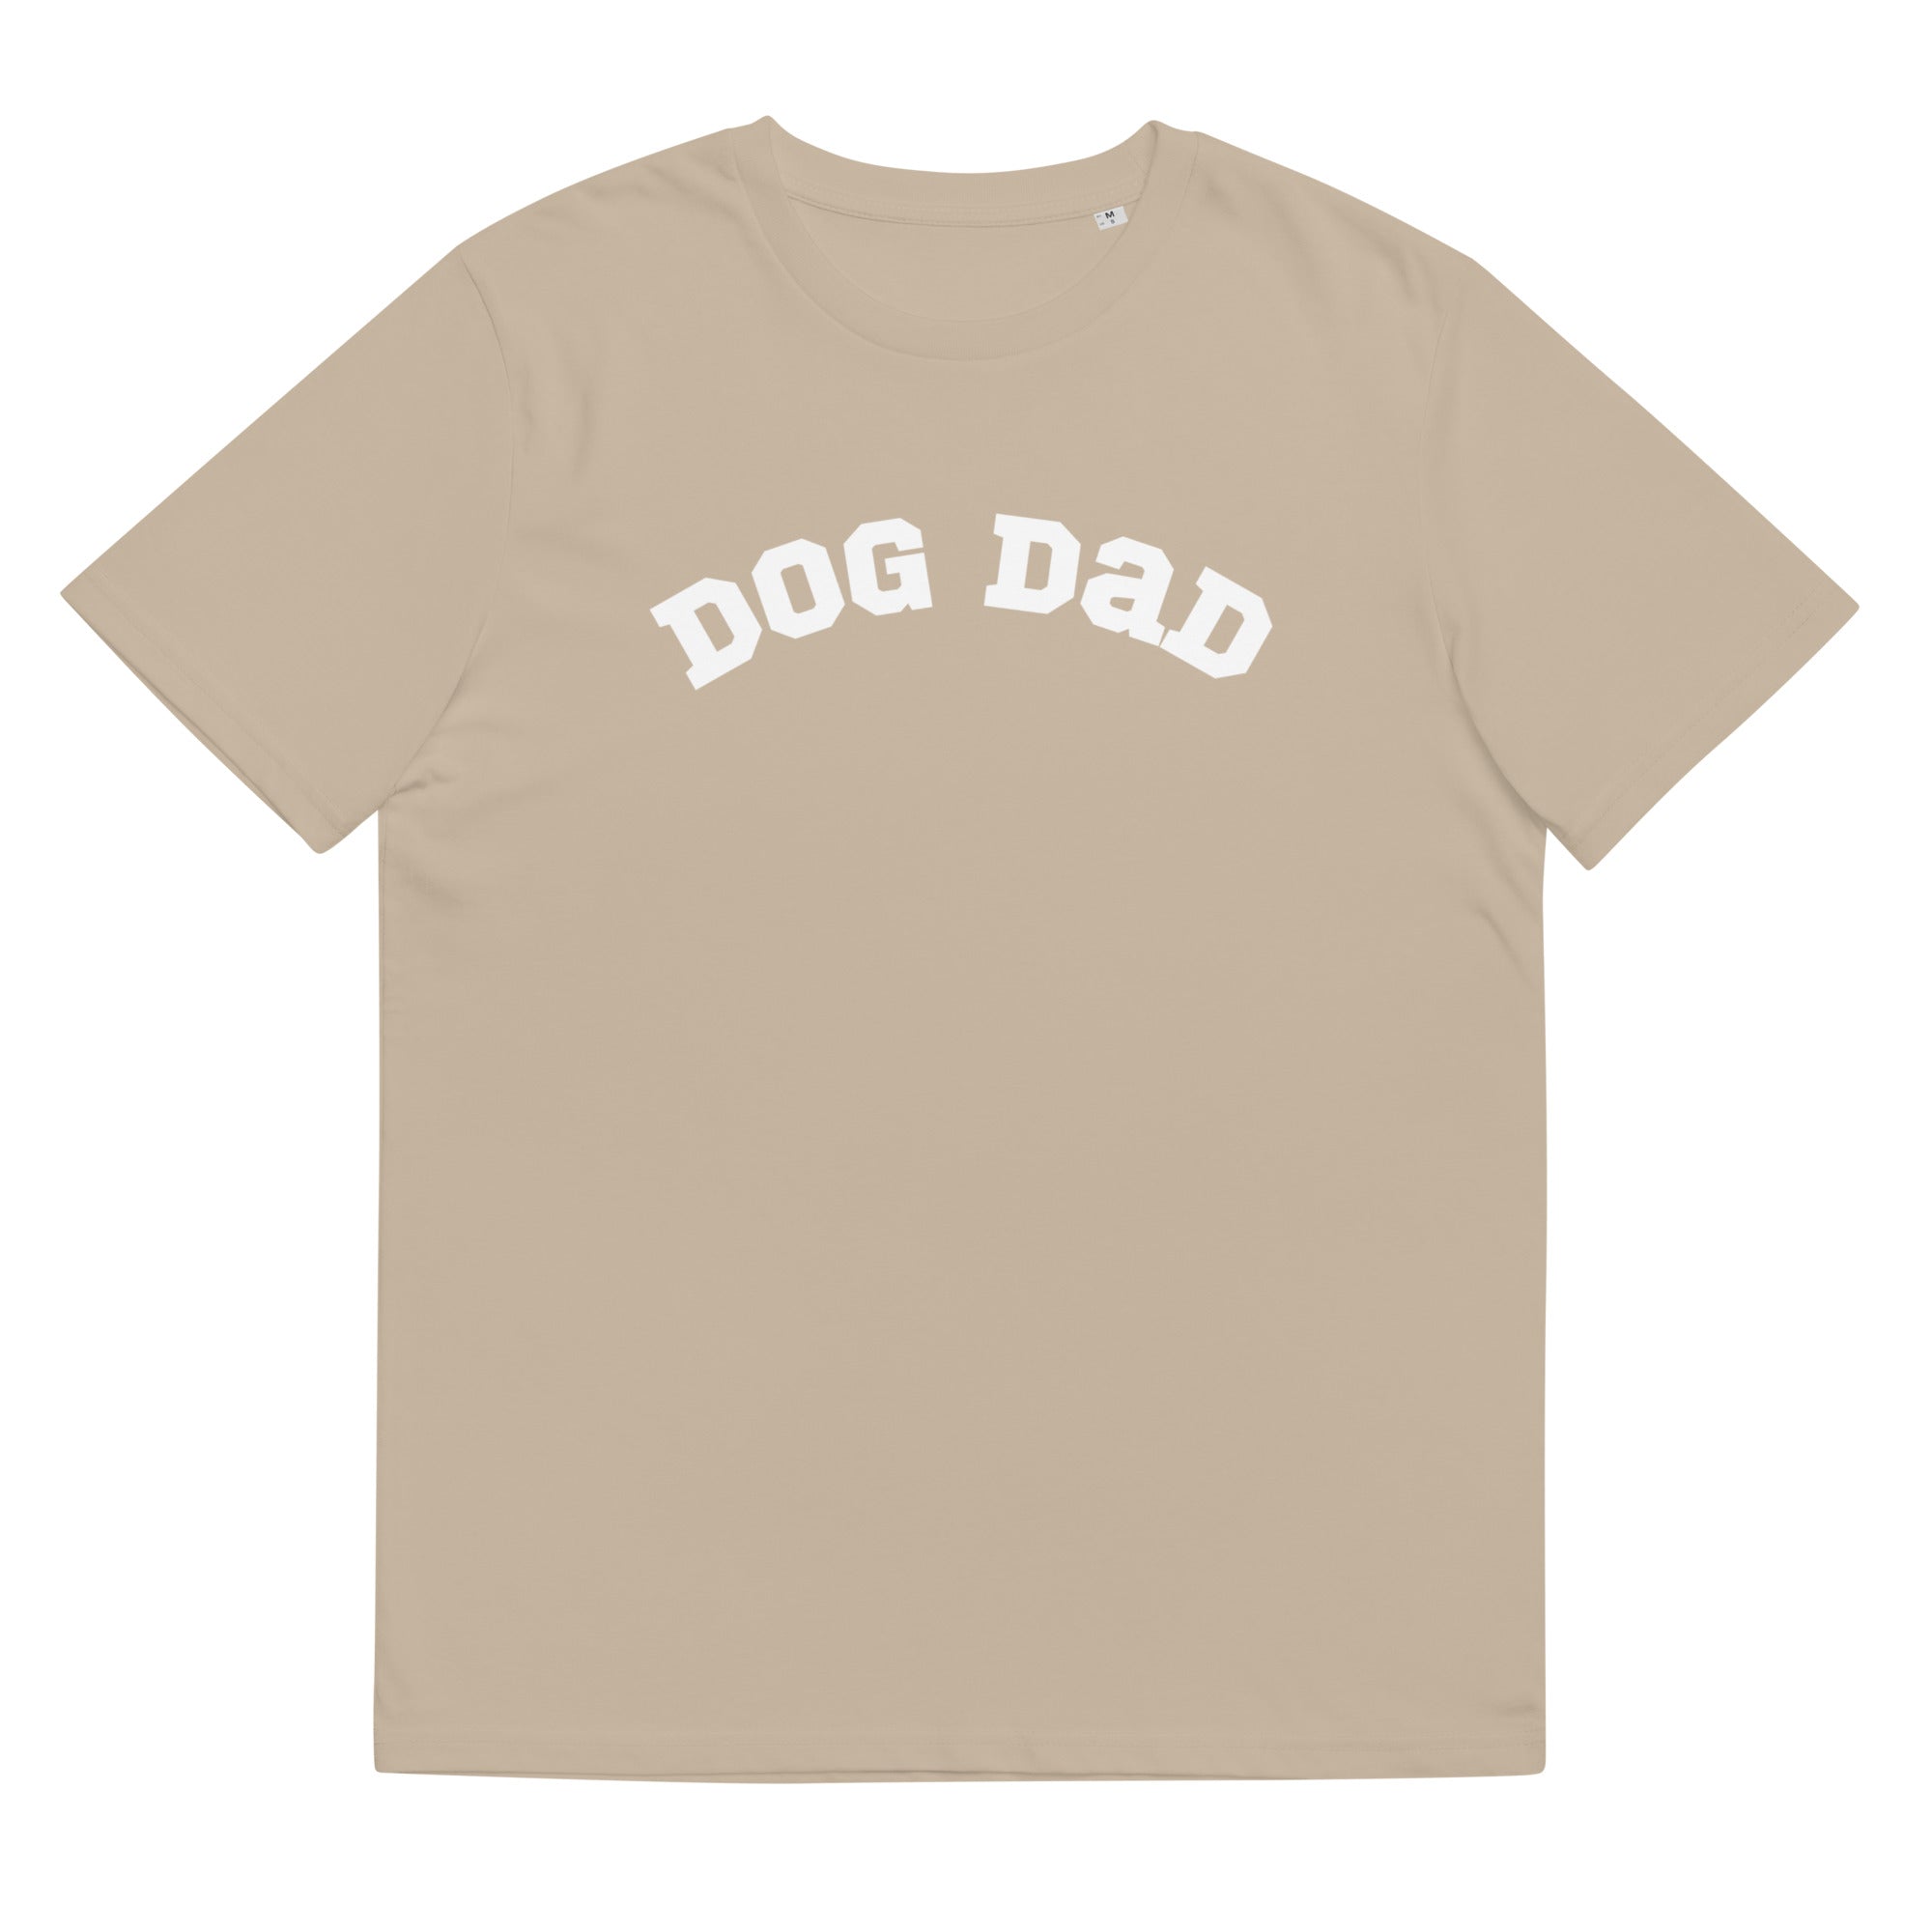 Dog Dad Organic Cotton T-shirt